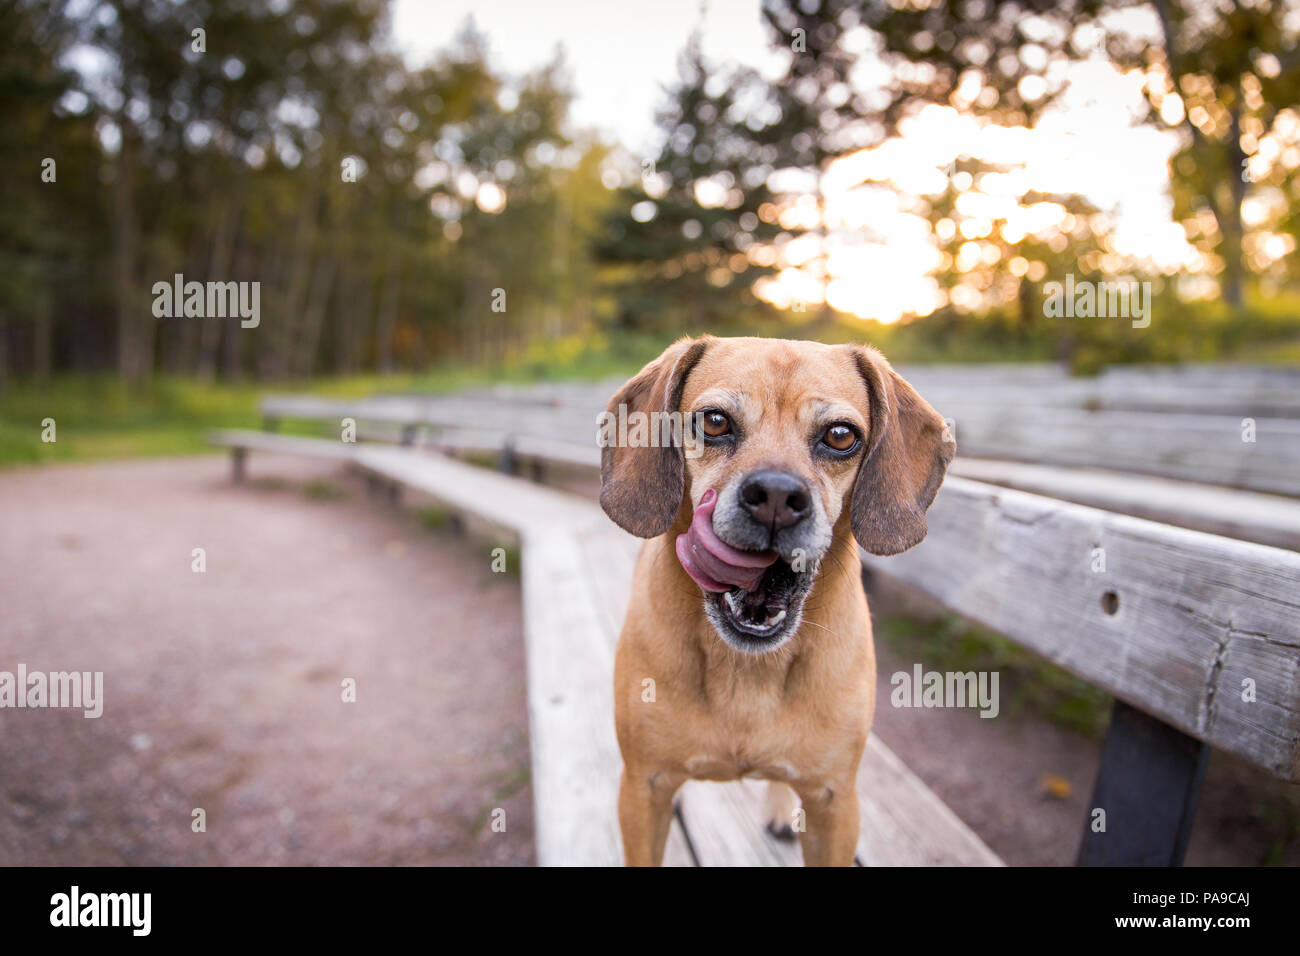 Pug Mix Dog Licking Lips Outdoors on Park Bench Stock Photo